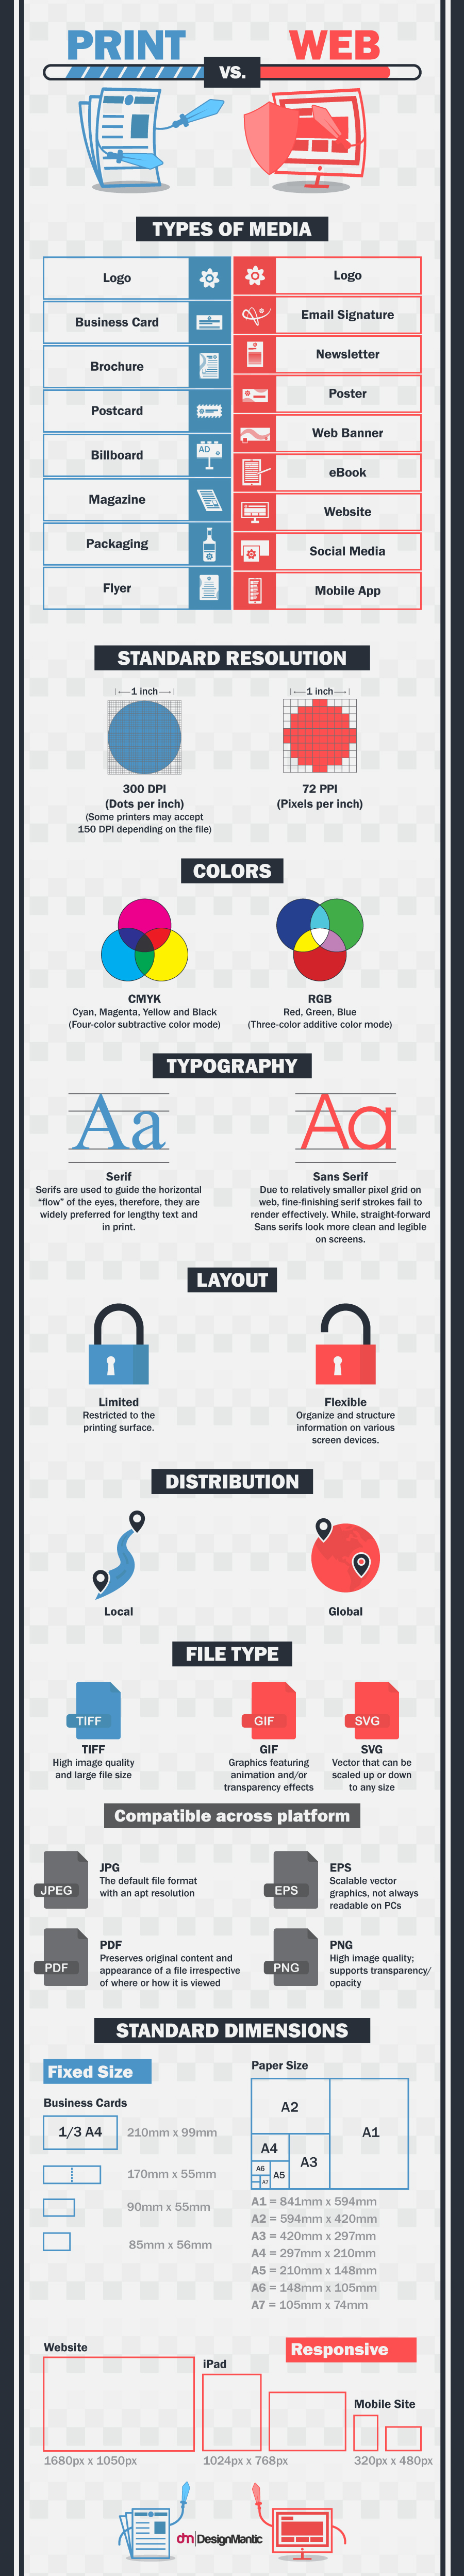 Print vs Web Design